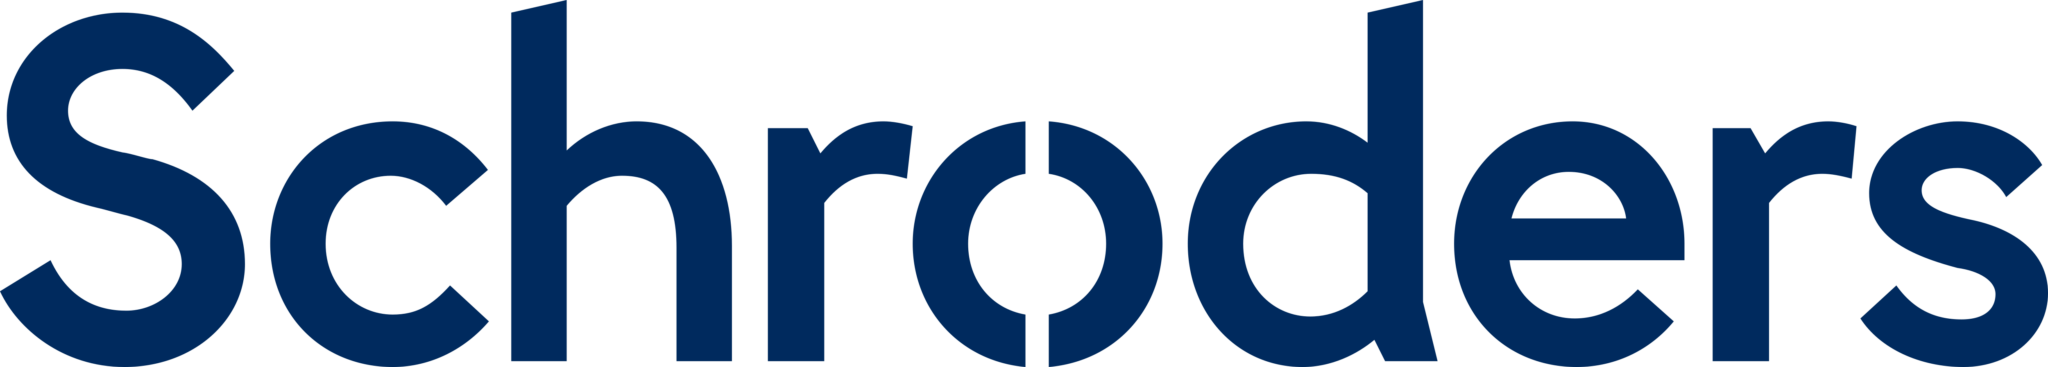 Schroders – Logos Download